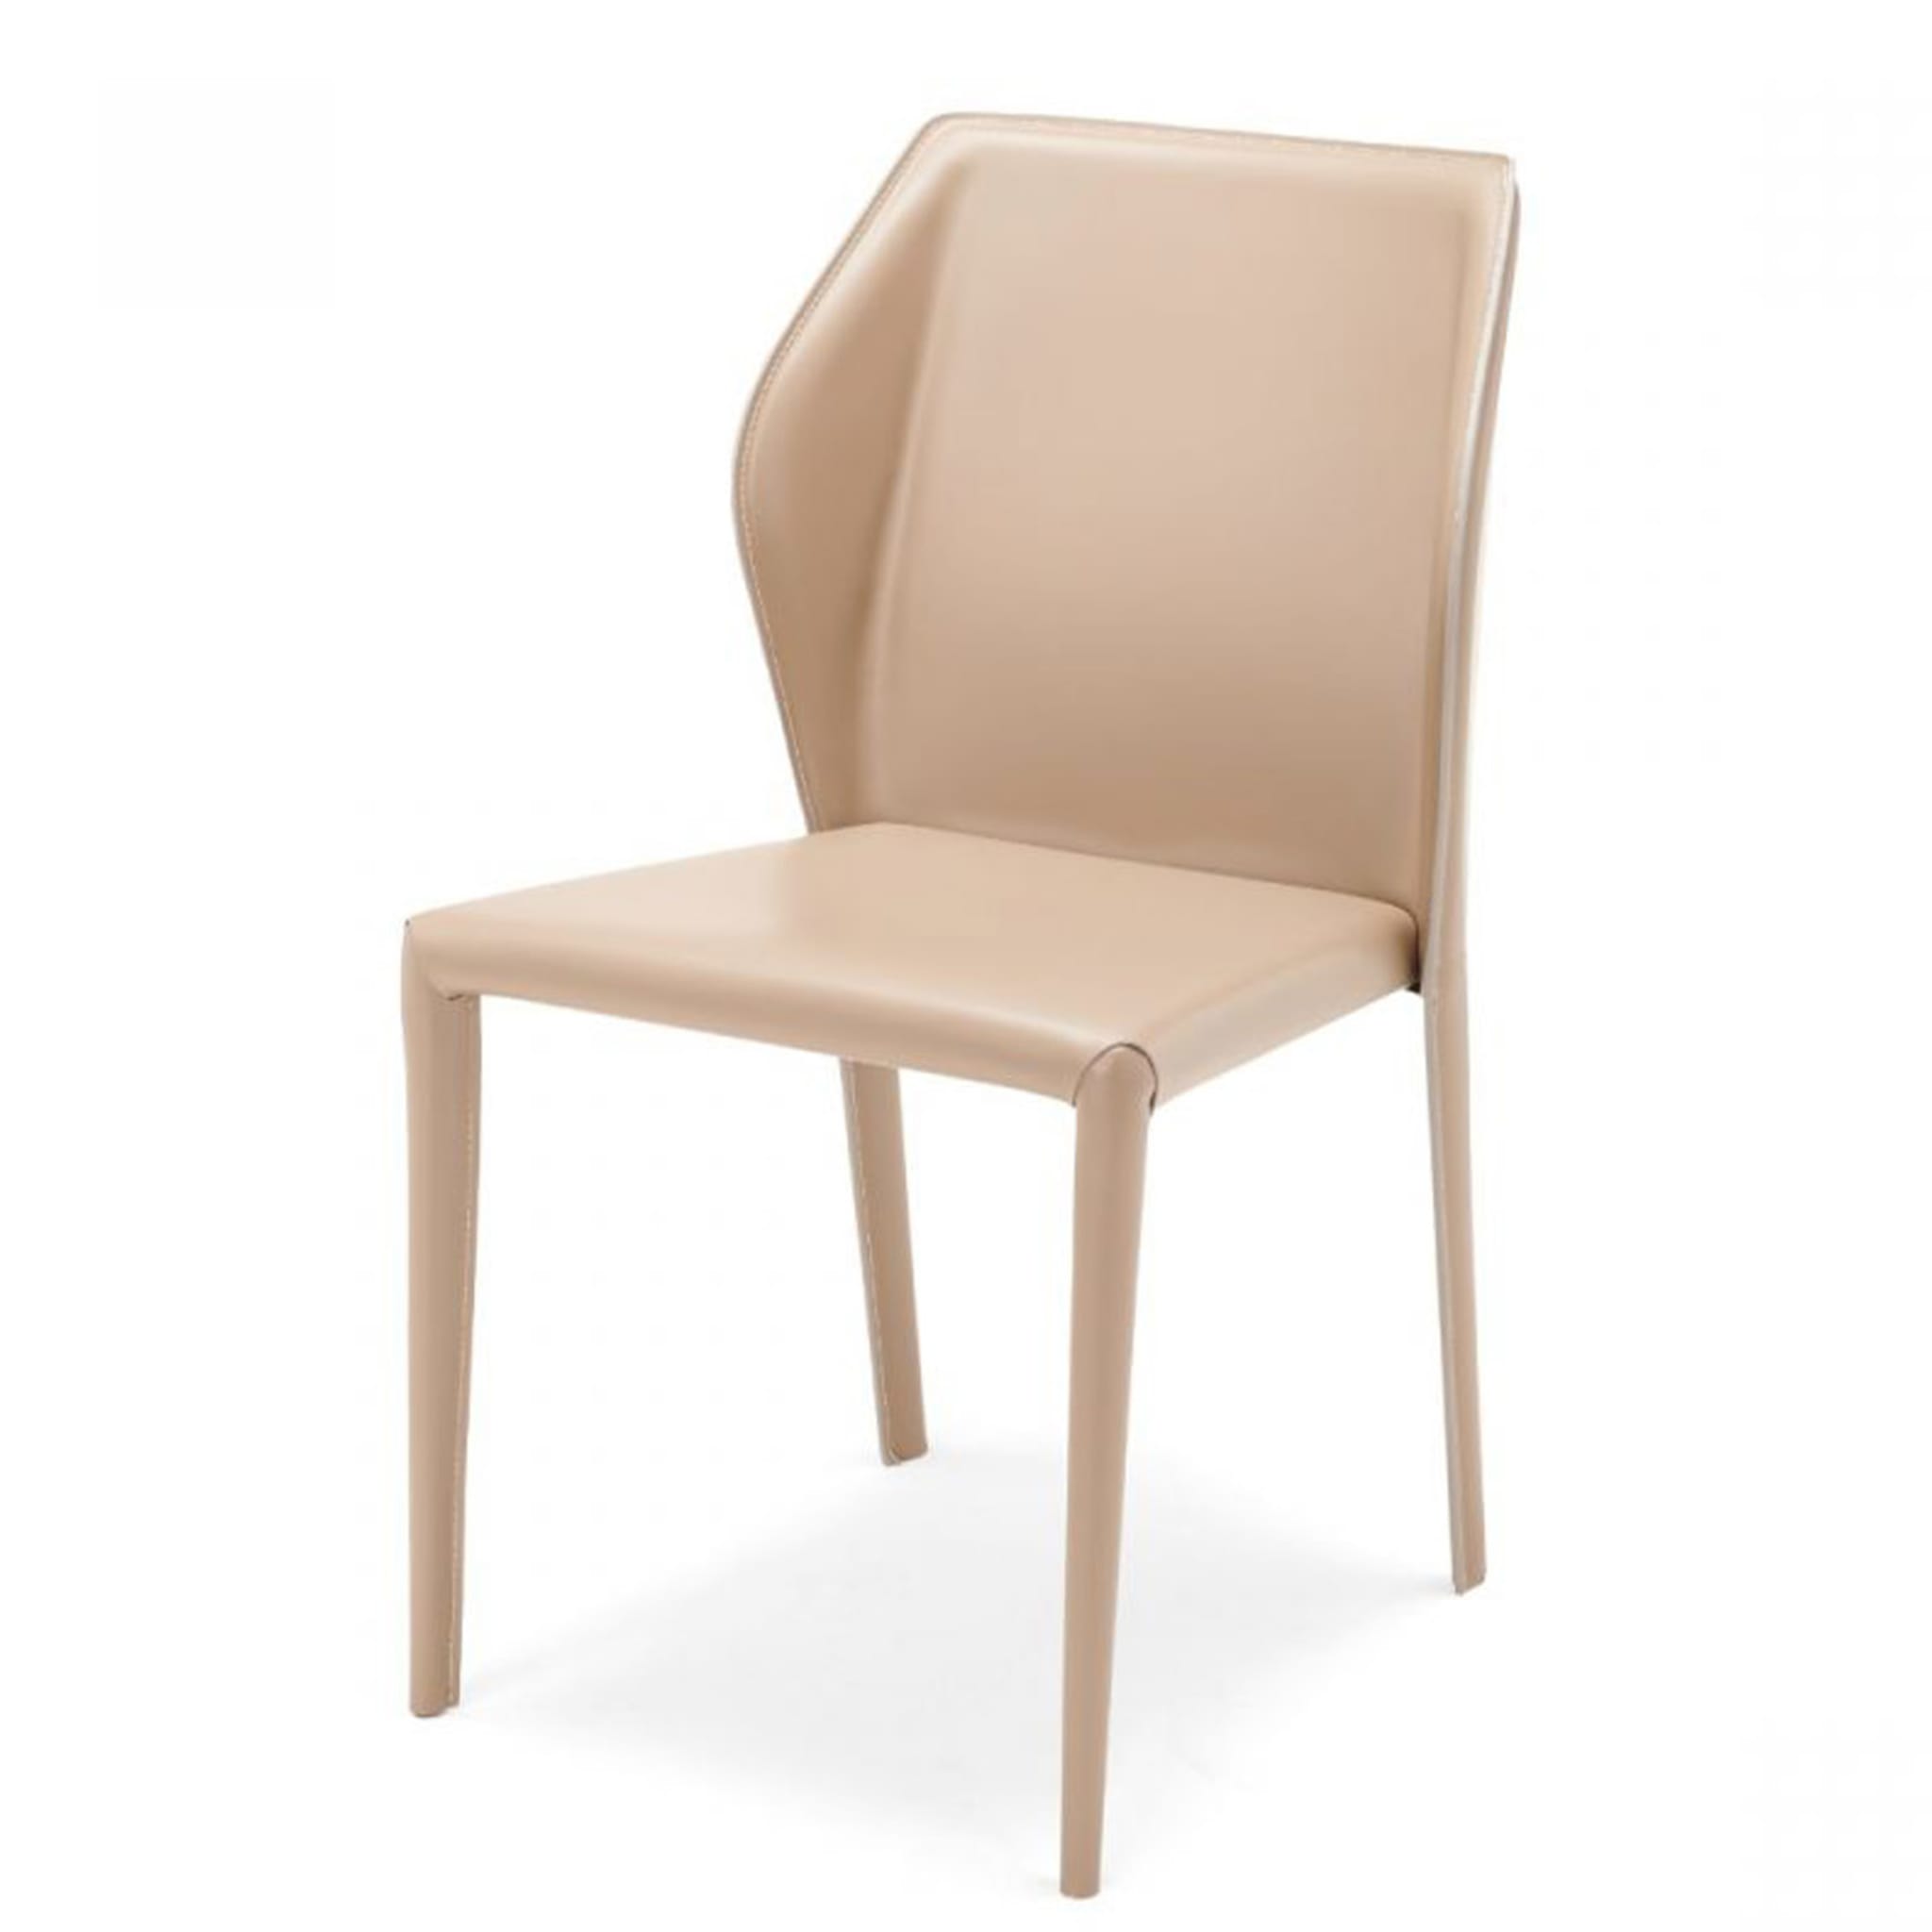 Set of 2 Fold Chair  - Alternative view 1